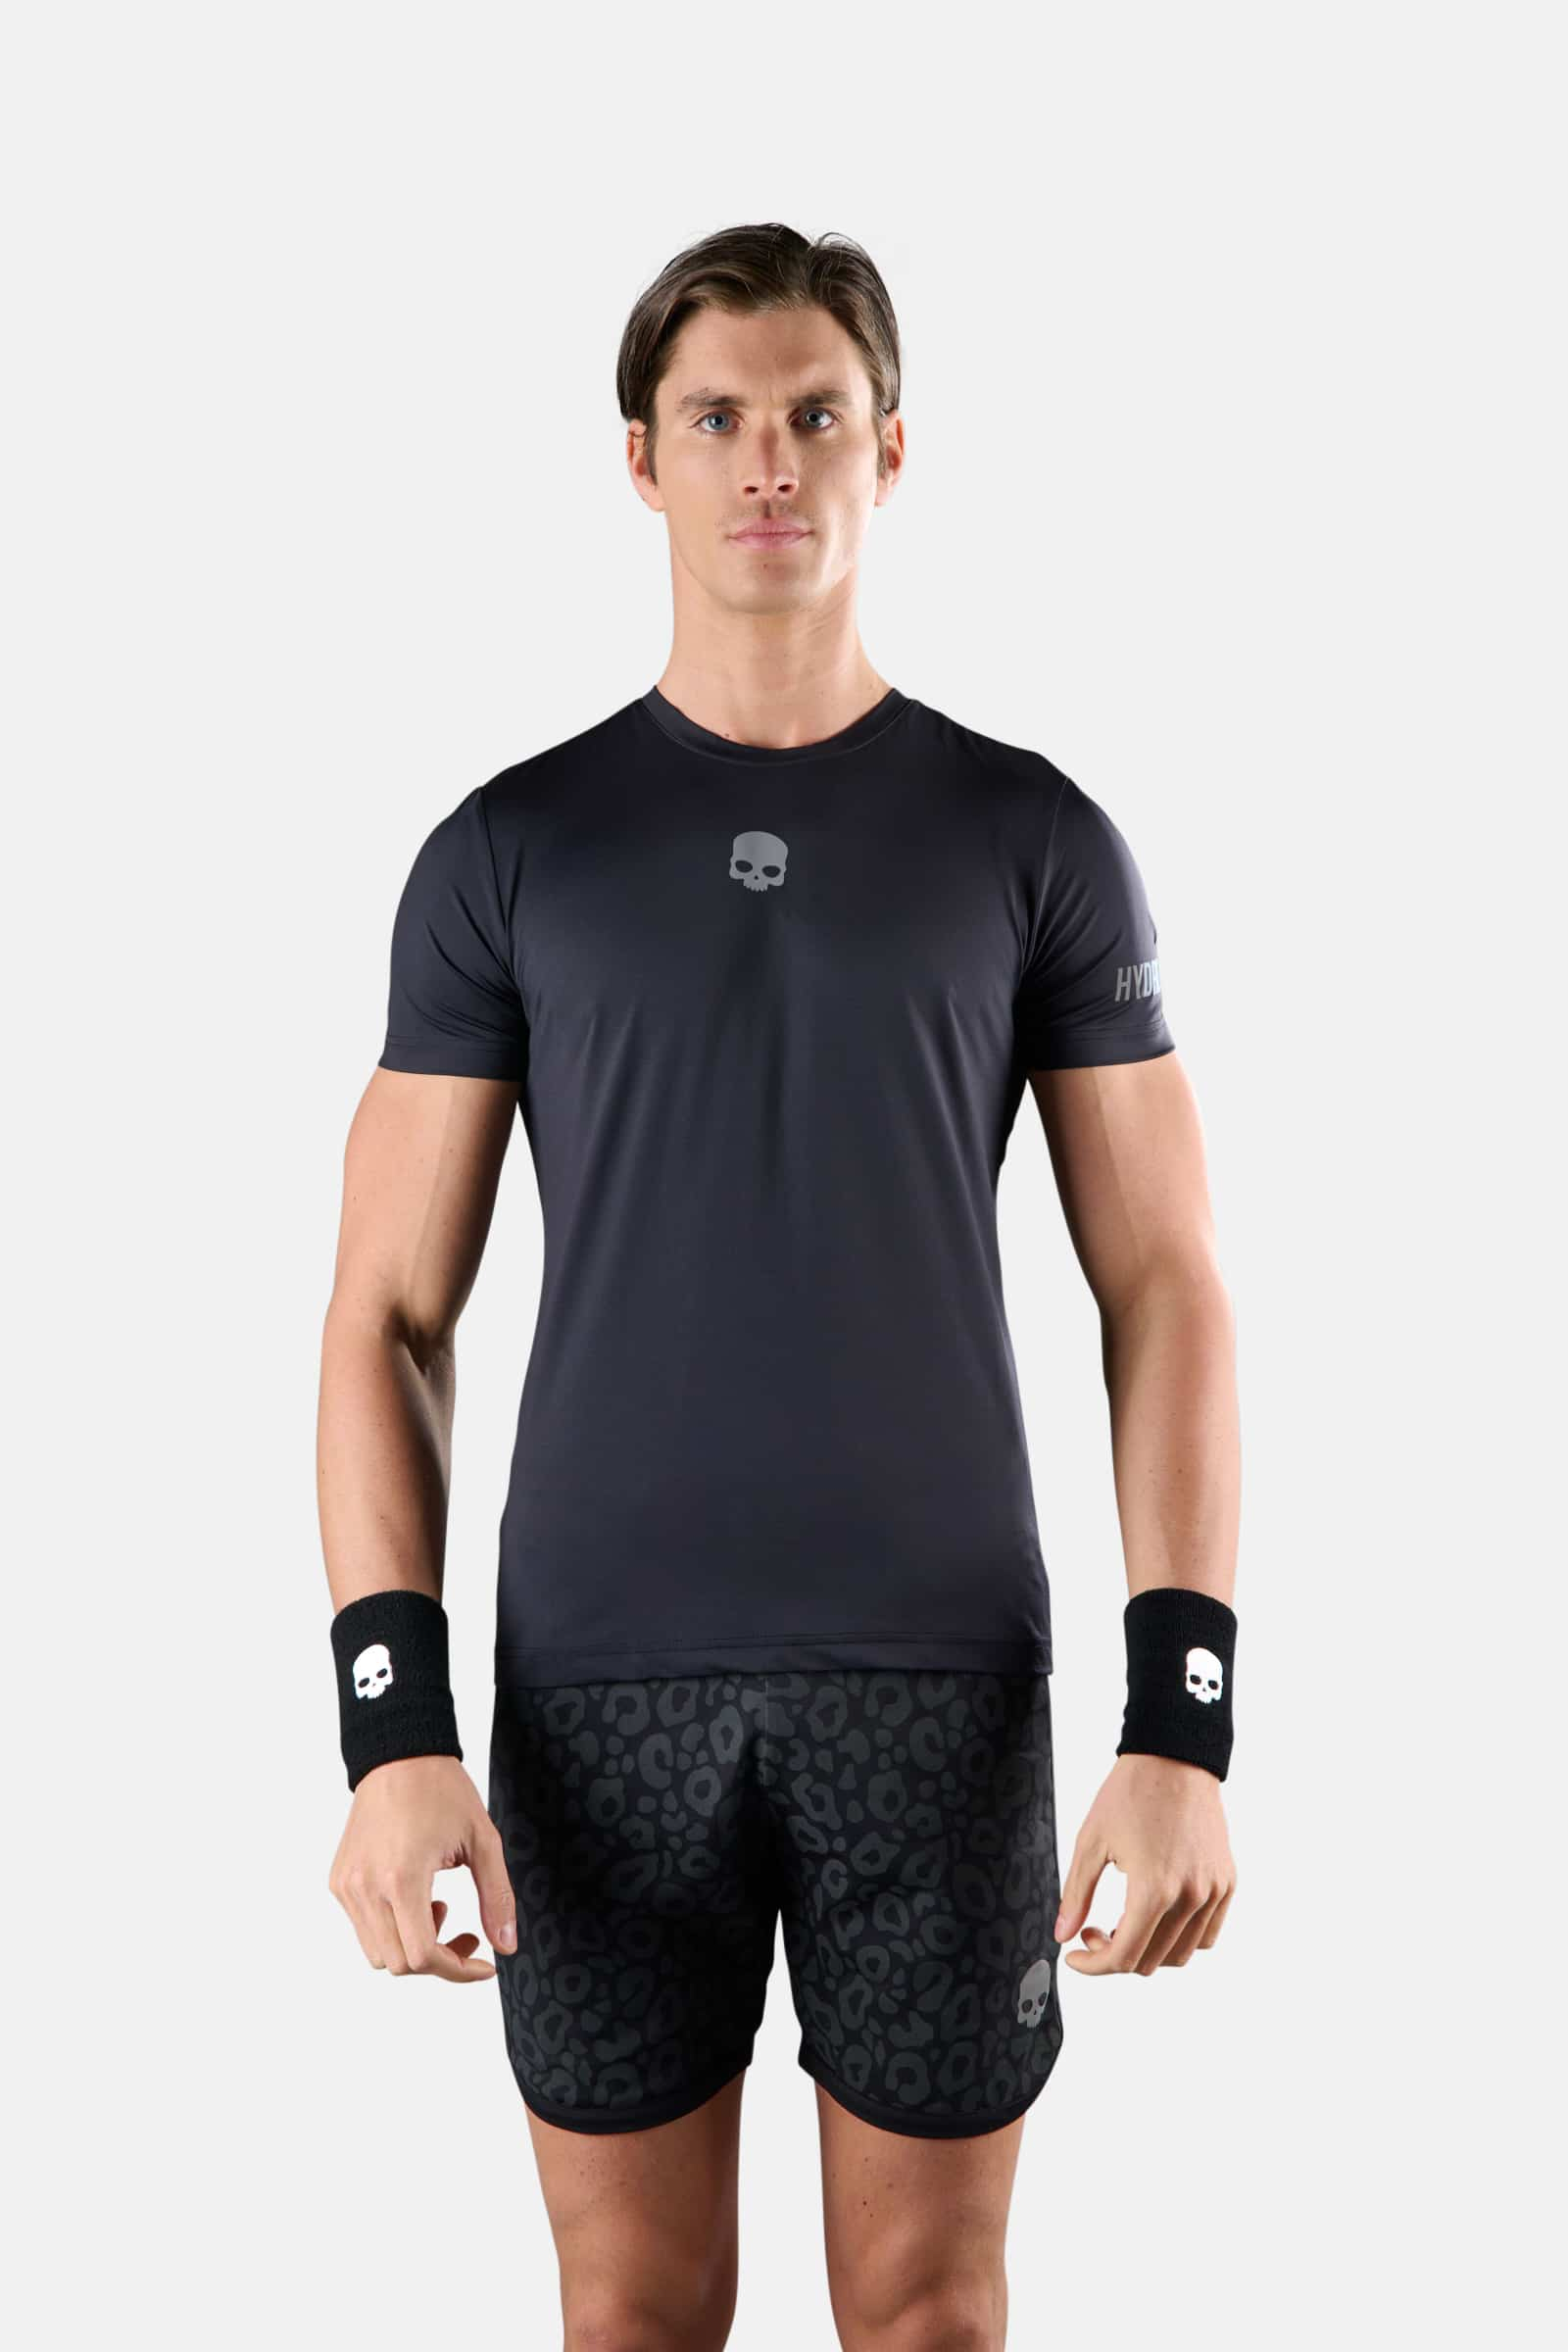 T-SHIRT TECNICA PANTHER - BLACK,GREY - Abbigliamento sportivo | Hydrogen